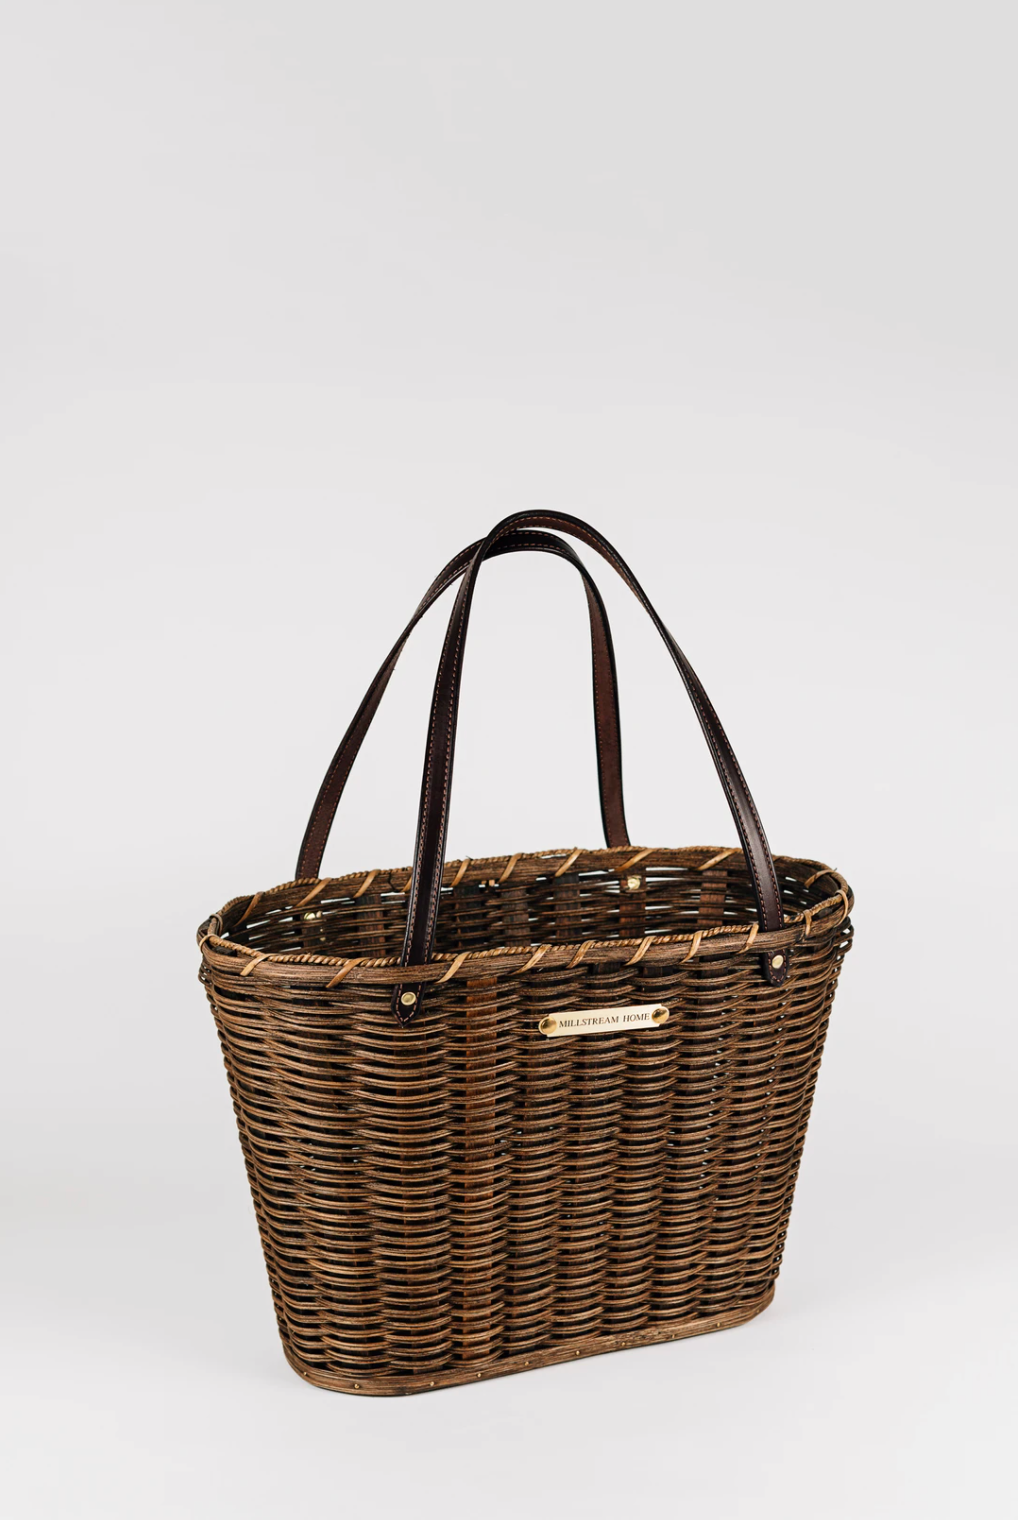 handwoven dark market basket with leather straps